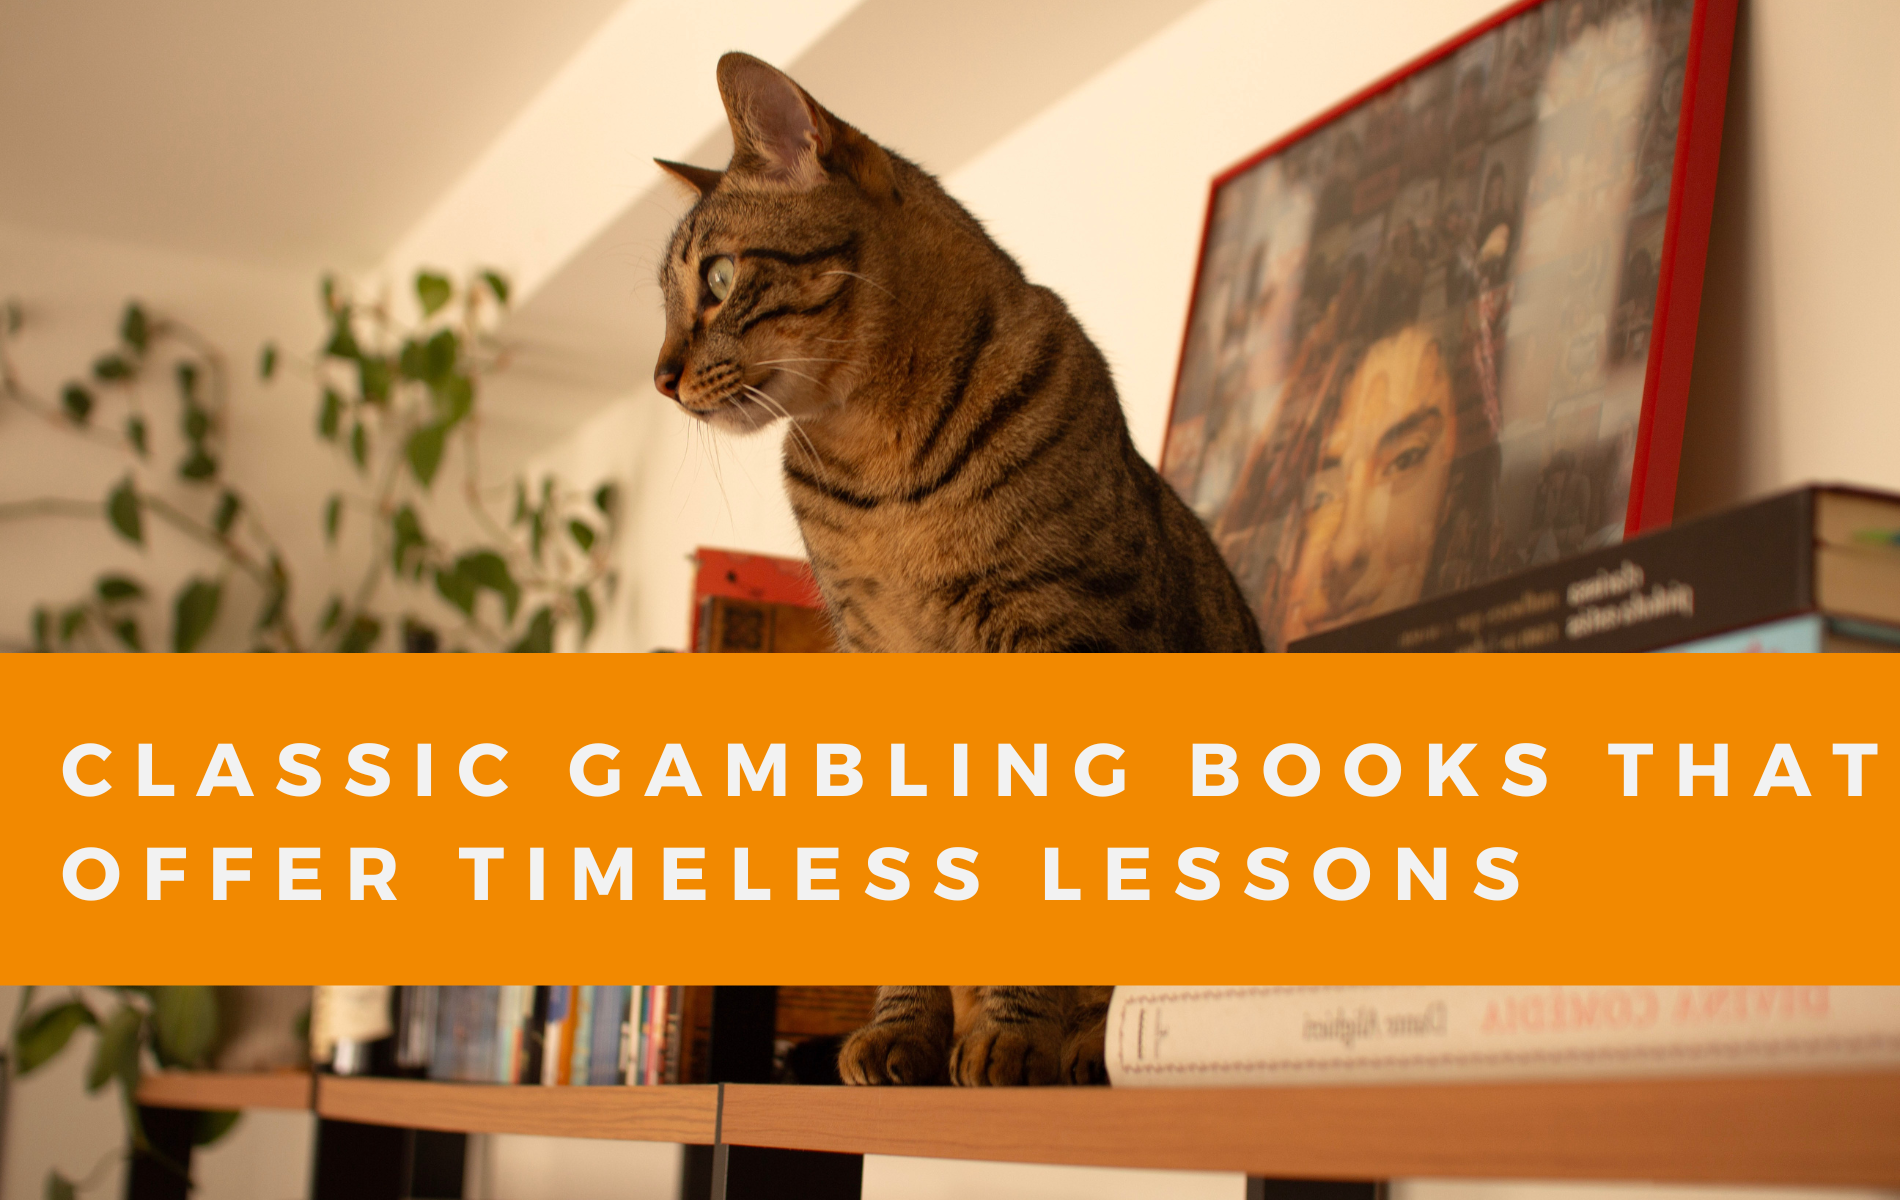 Classics in Gambling Literature